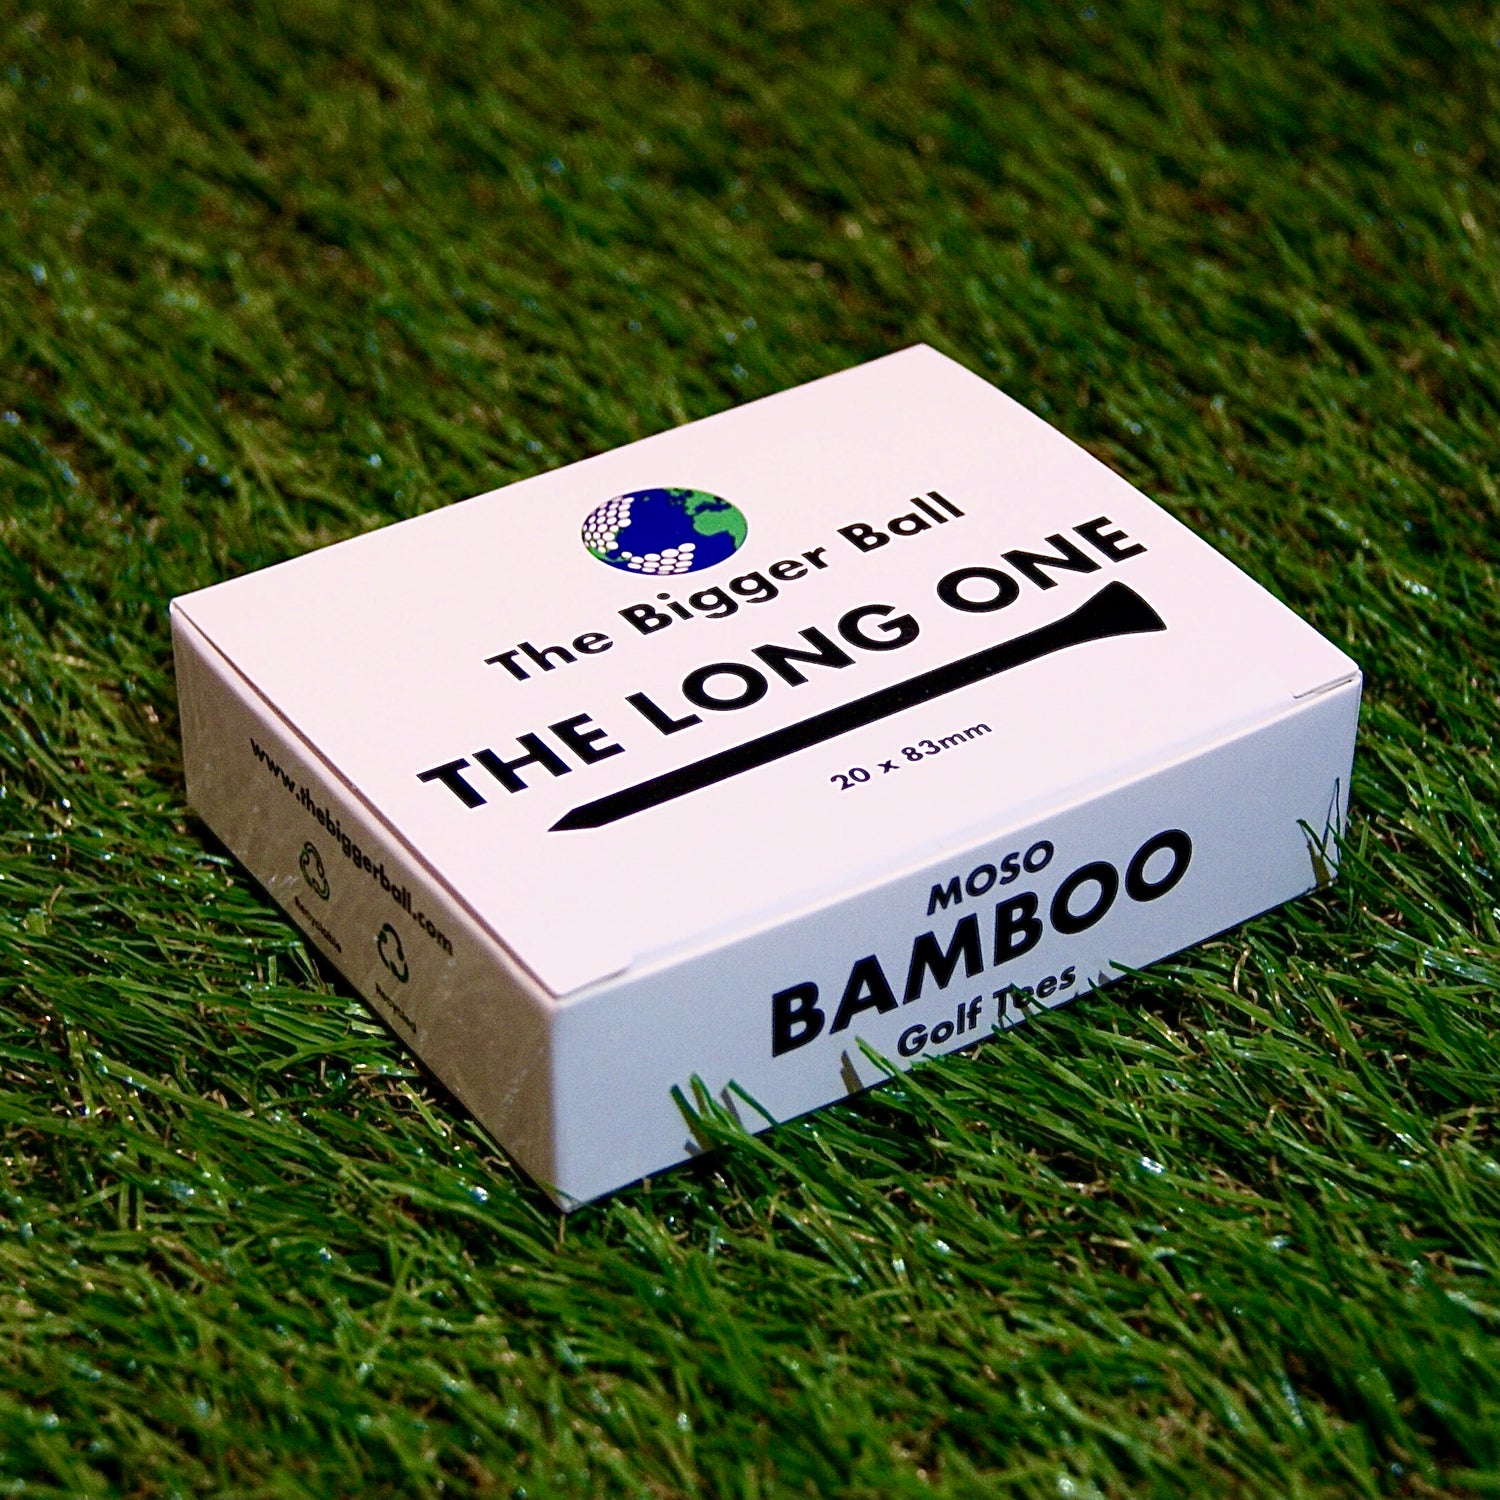 box of Long Golf Tees on grass